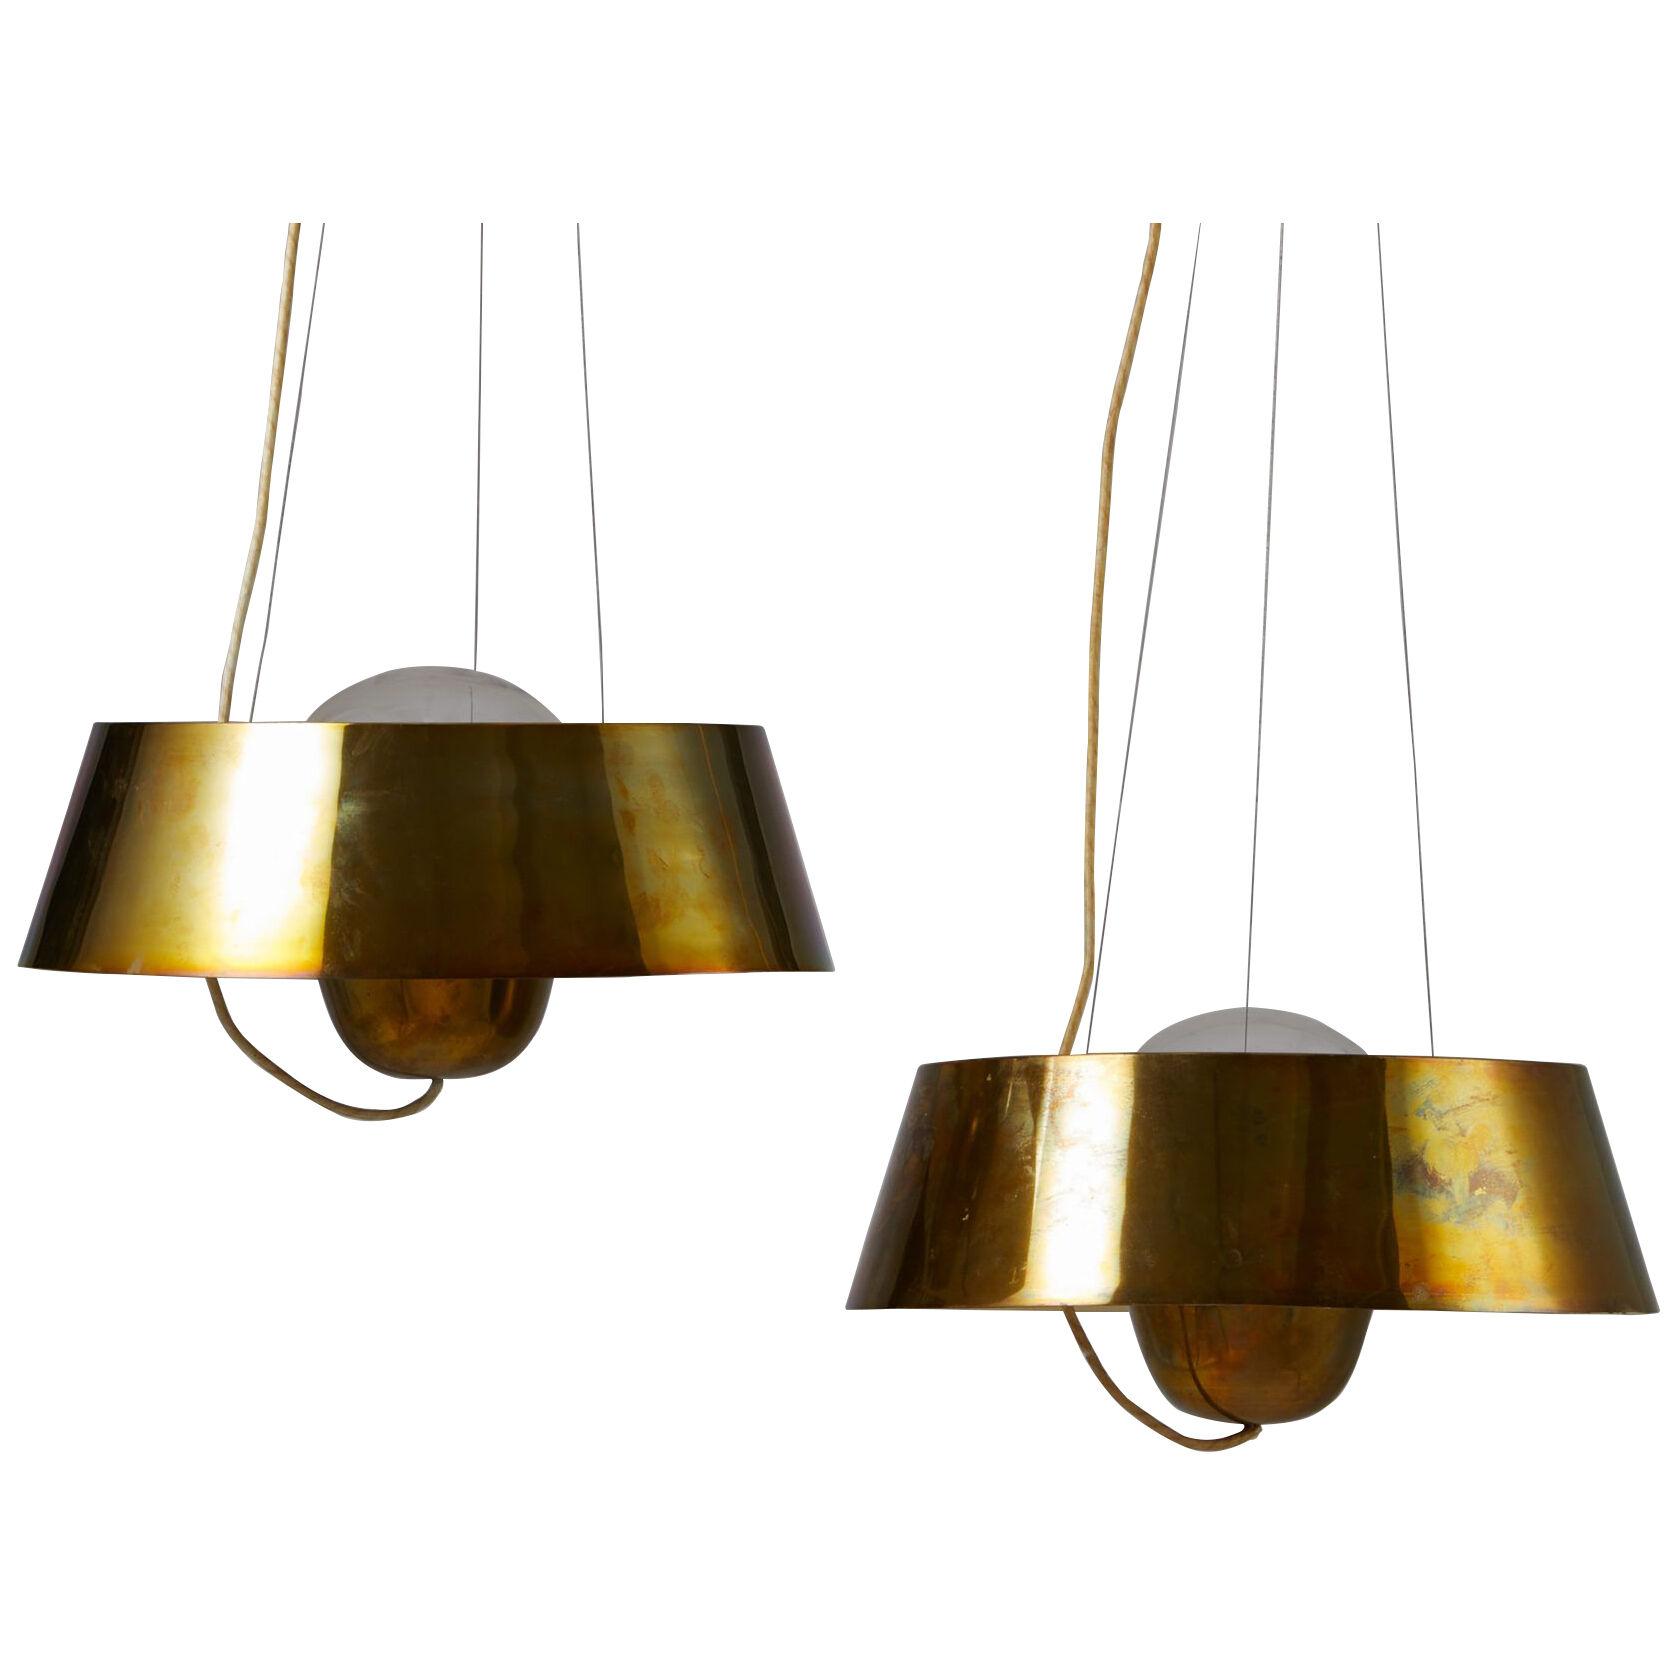 Ceiling “City Hall Lamp” designed By Arne Jacobsen for Louis Poulsen,